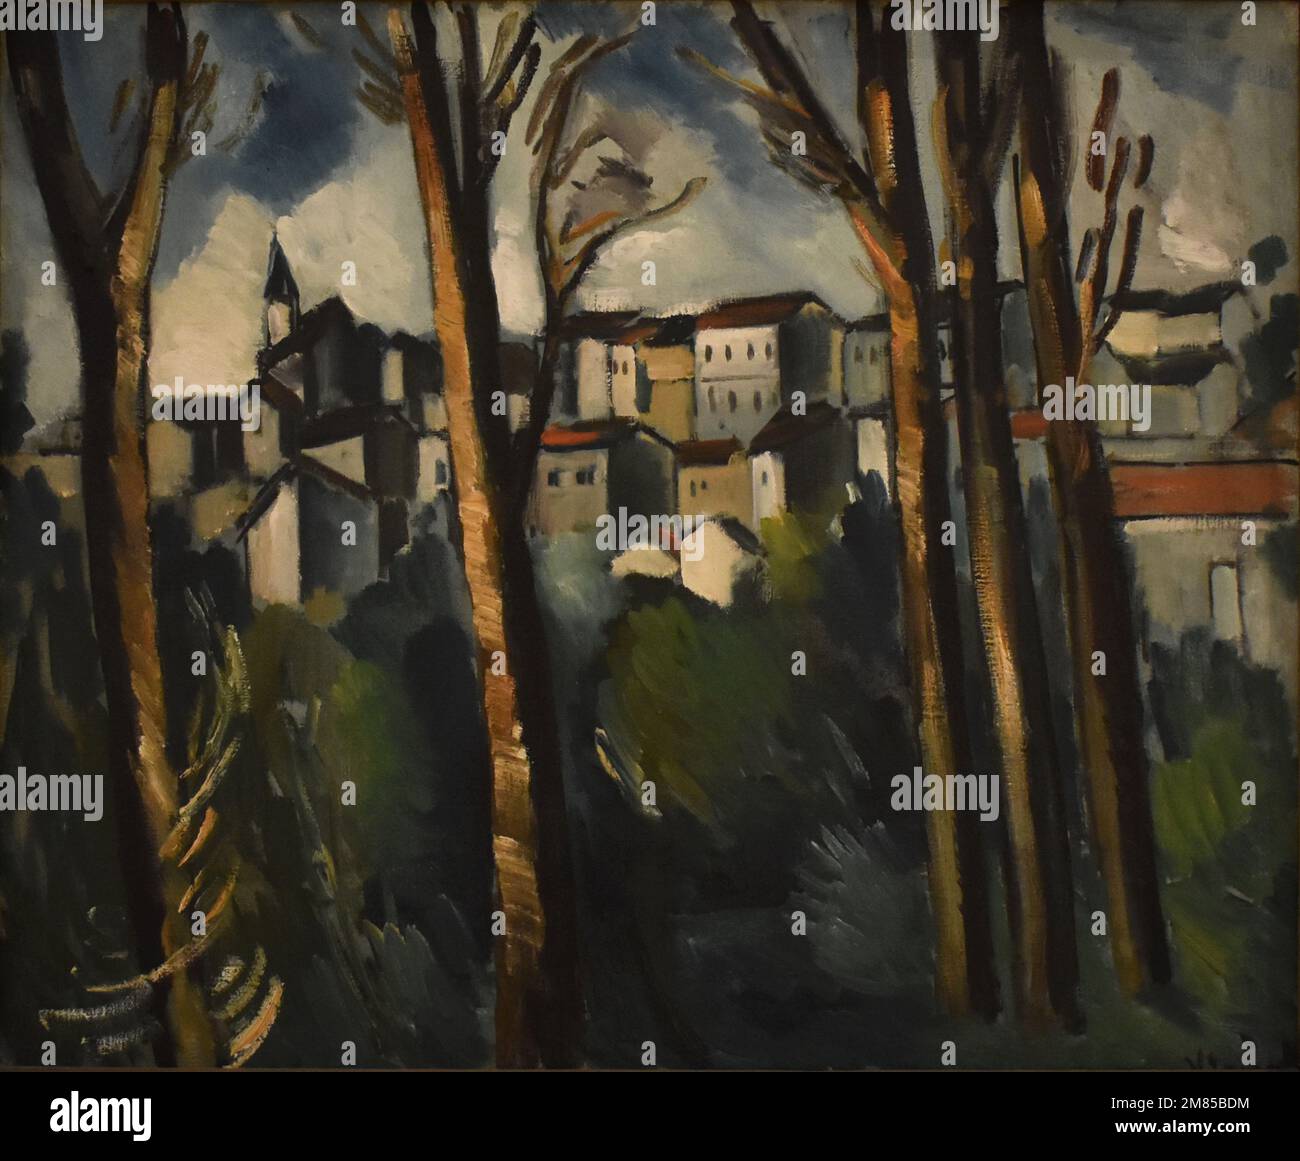 Maurice Vlaminck (1876-1958). Village vu à travers les arbres. 1914. Musée Statens de Kunst. Kopenhagen, Dänemark. Banque D'Images